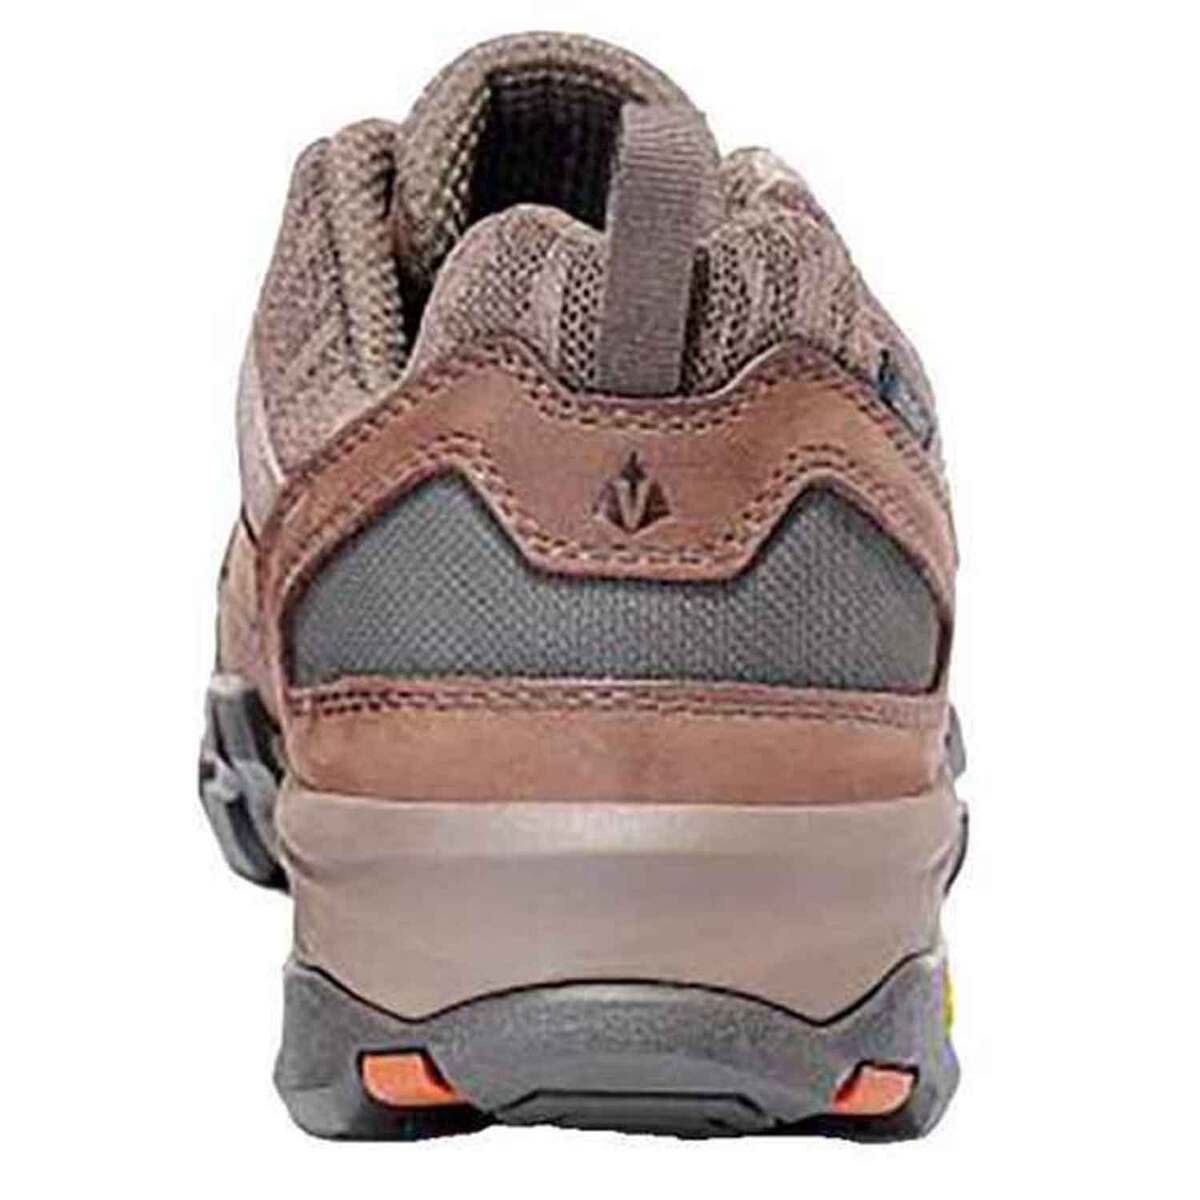 Vasque Men's Talus AT Waterproof Low Hiking Shoes | Sportsman's Warehouse